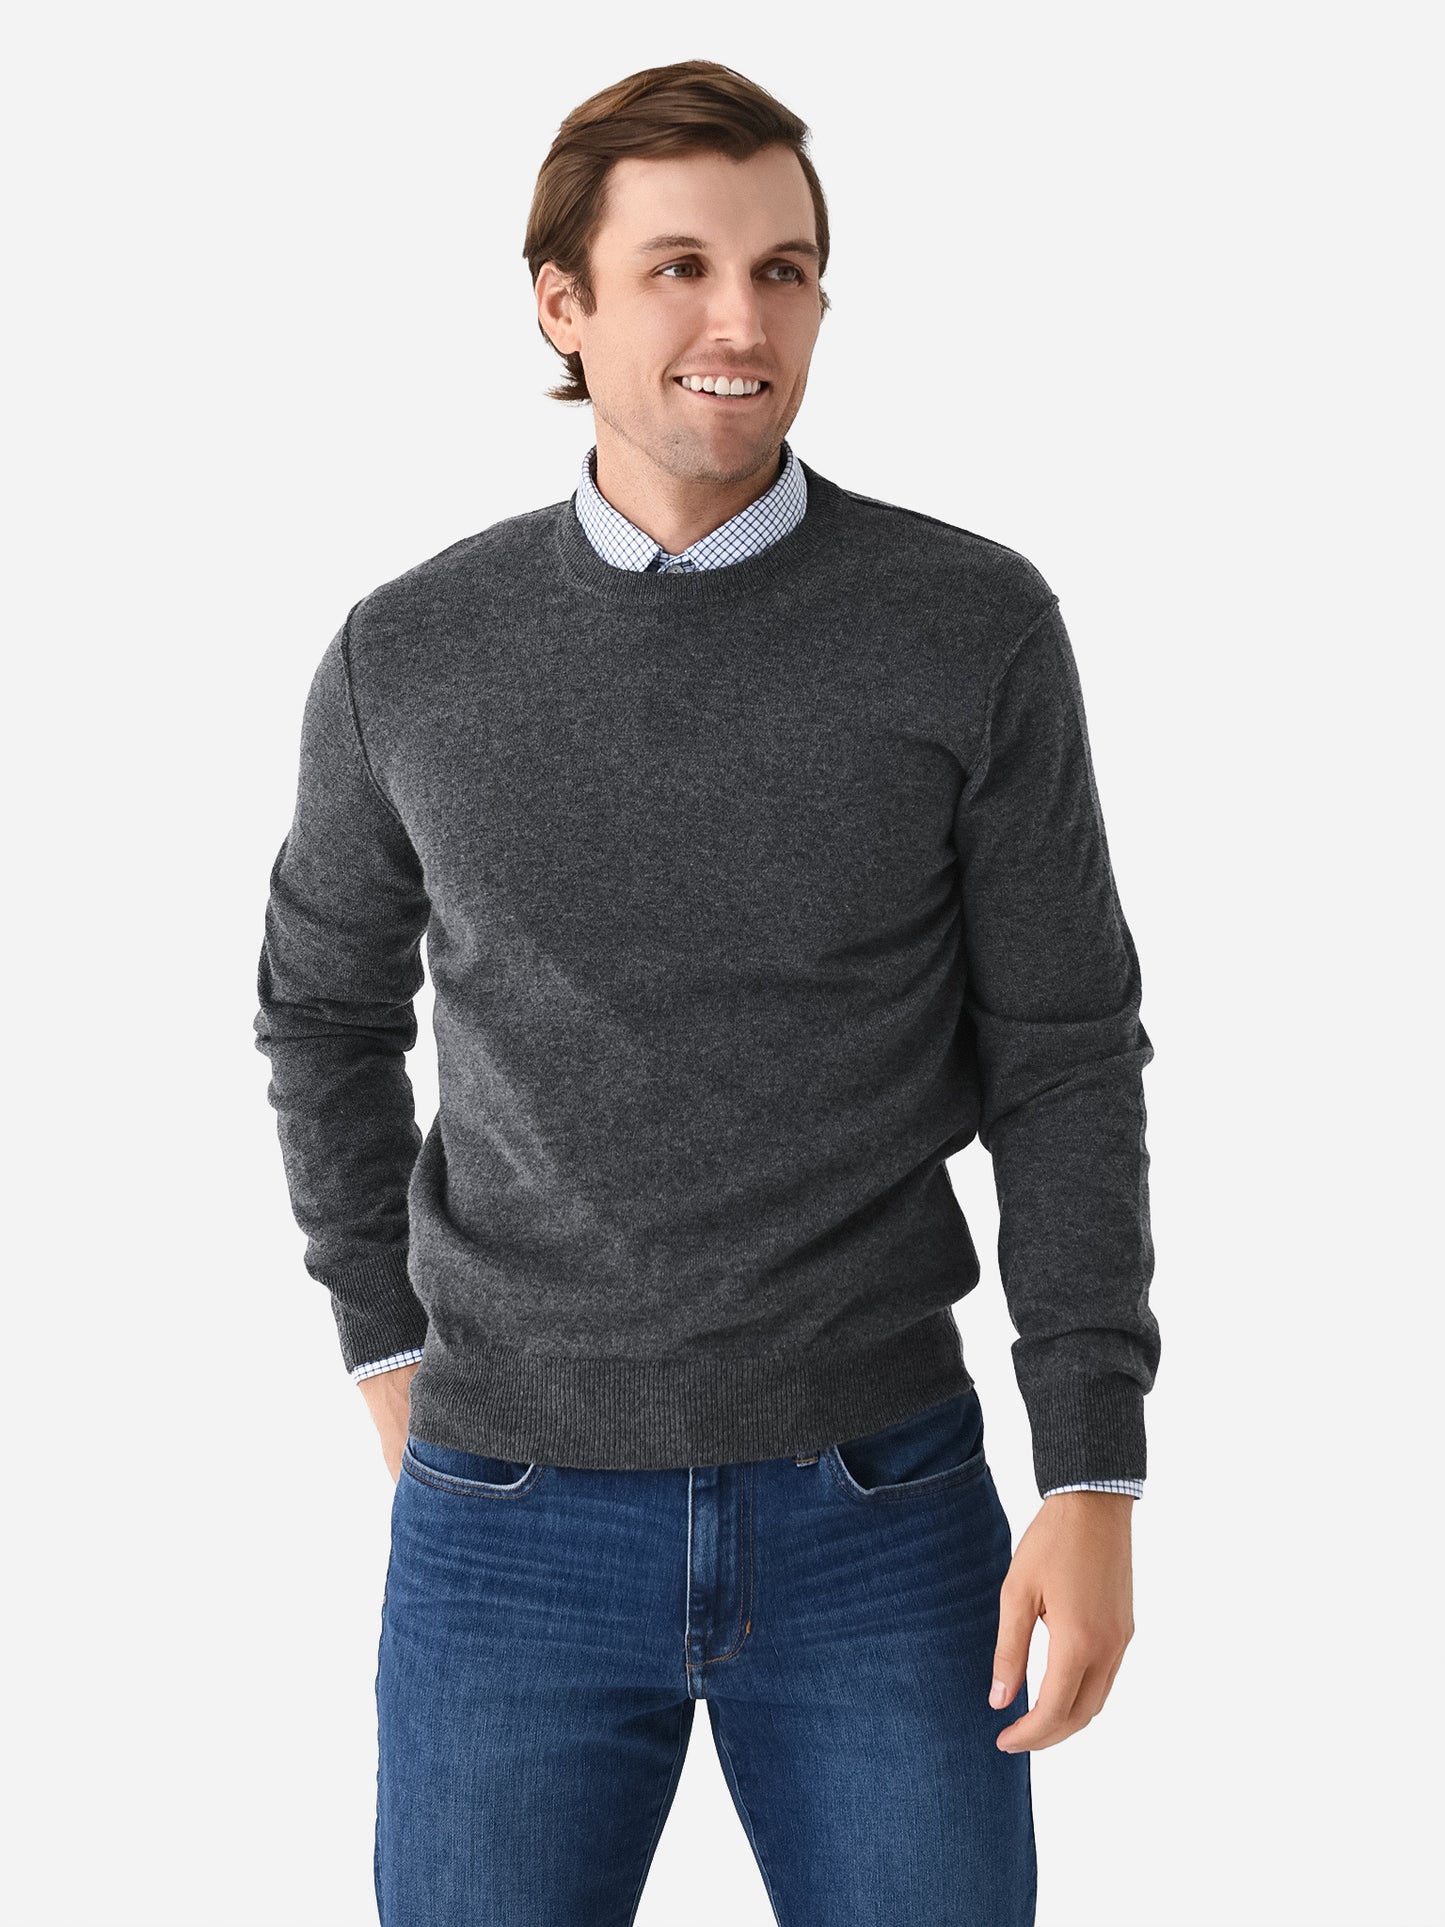 Hartford Men's Wool Cashmere Crewneck Sweater